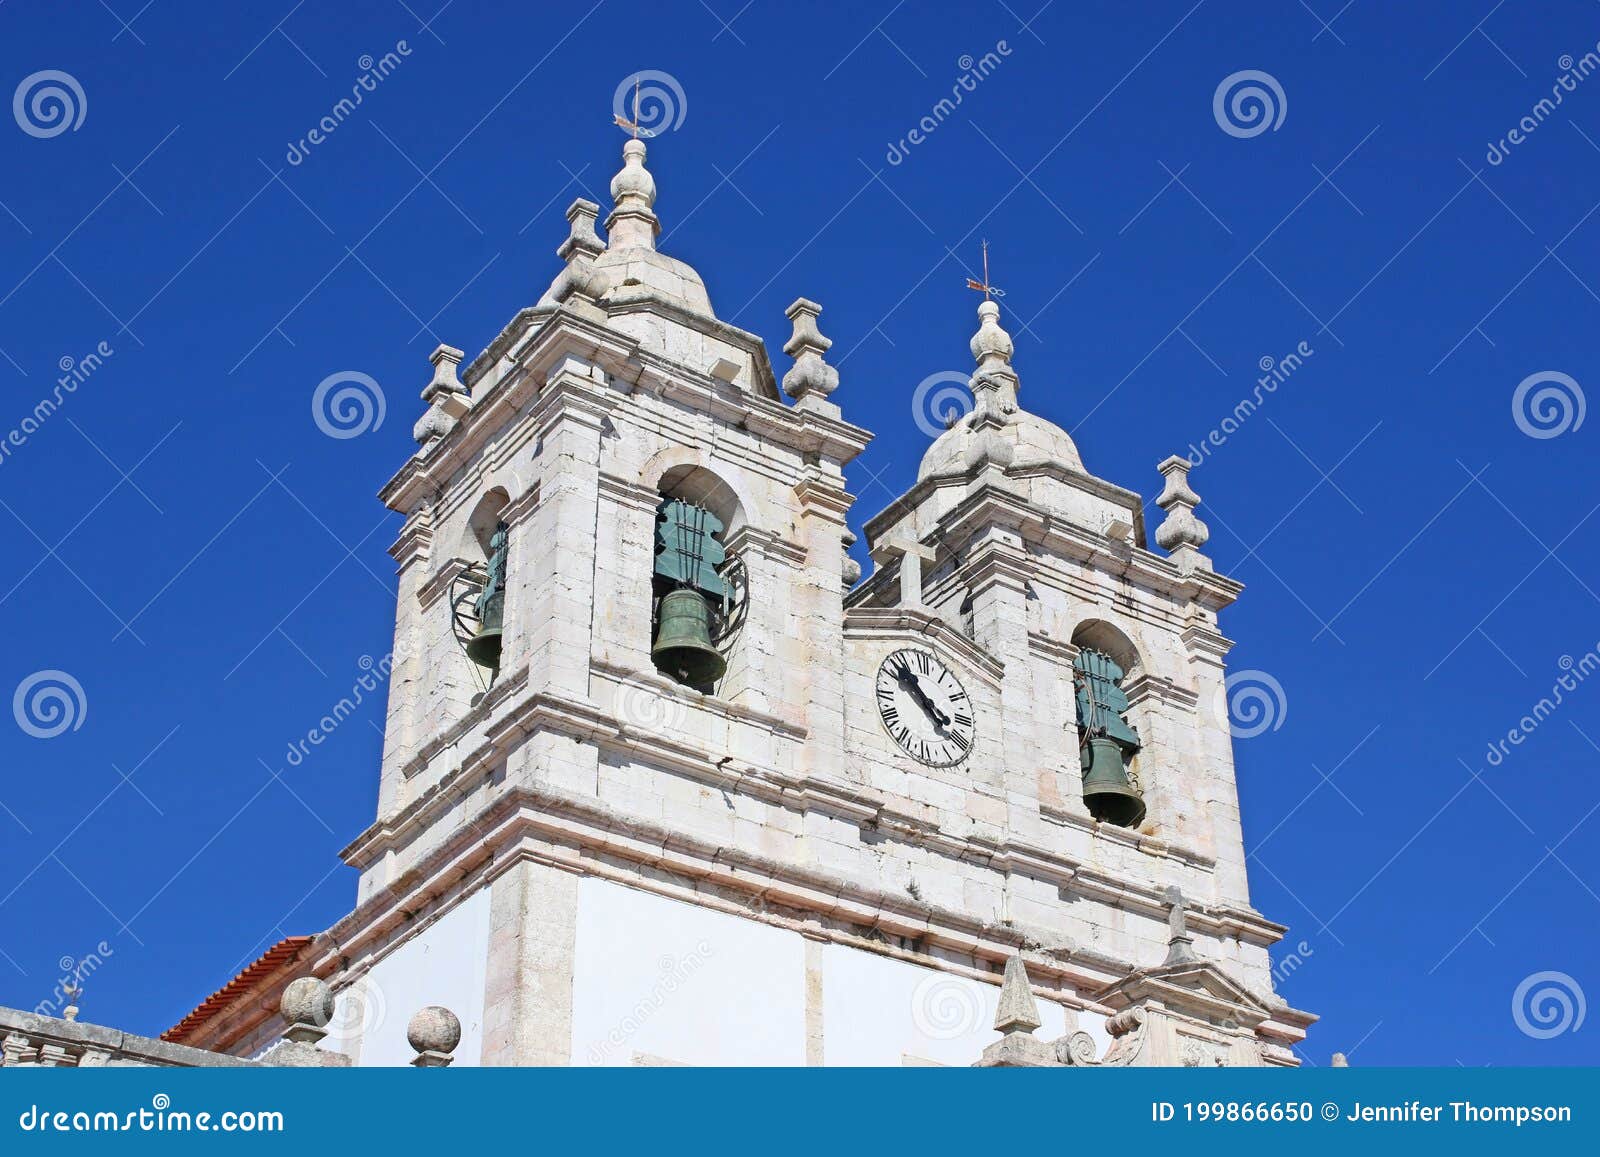 church of nossa senhora da nazare, sitio